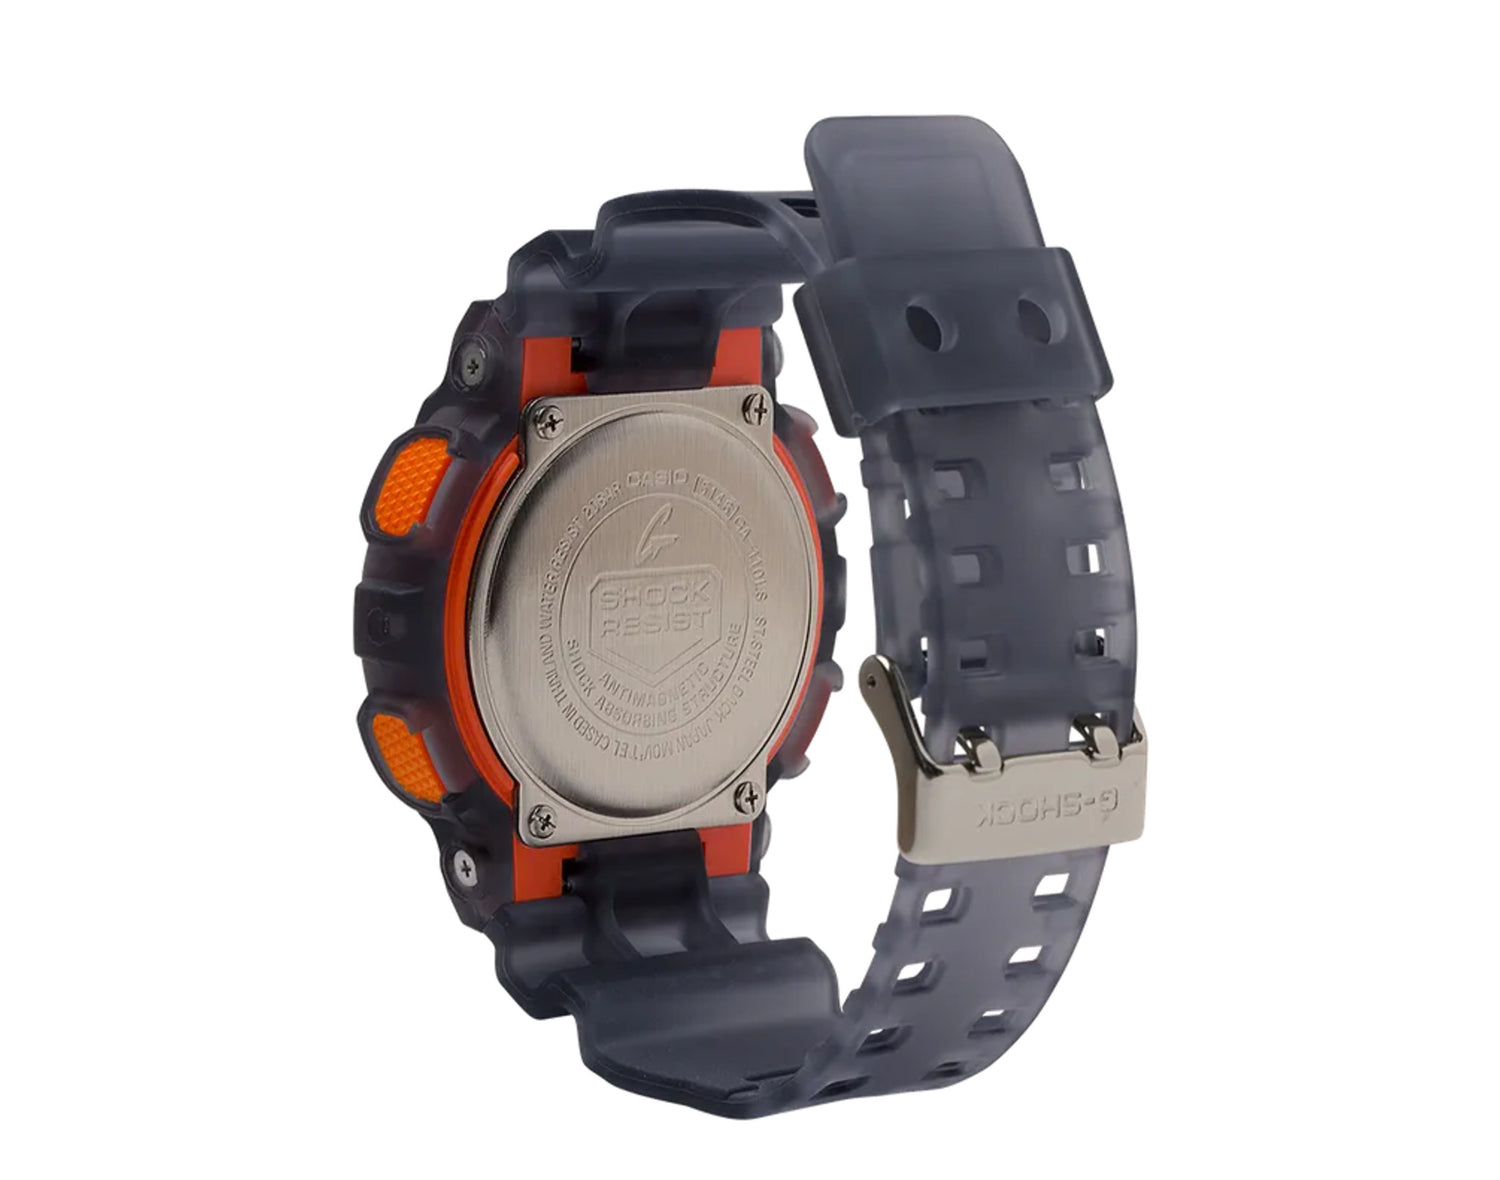 Casio G-Shock GA110 Semi-Transparent Analog-Digital Resin Men's Watch